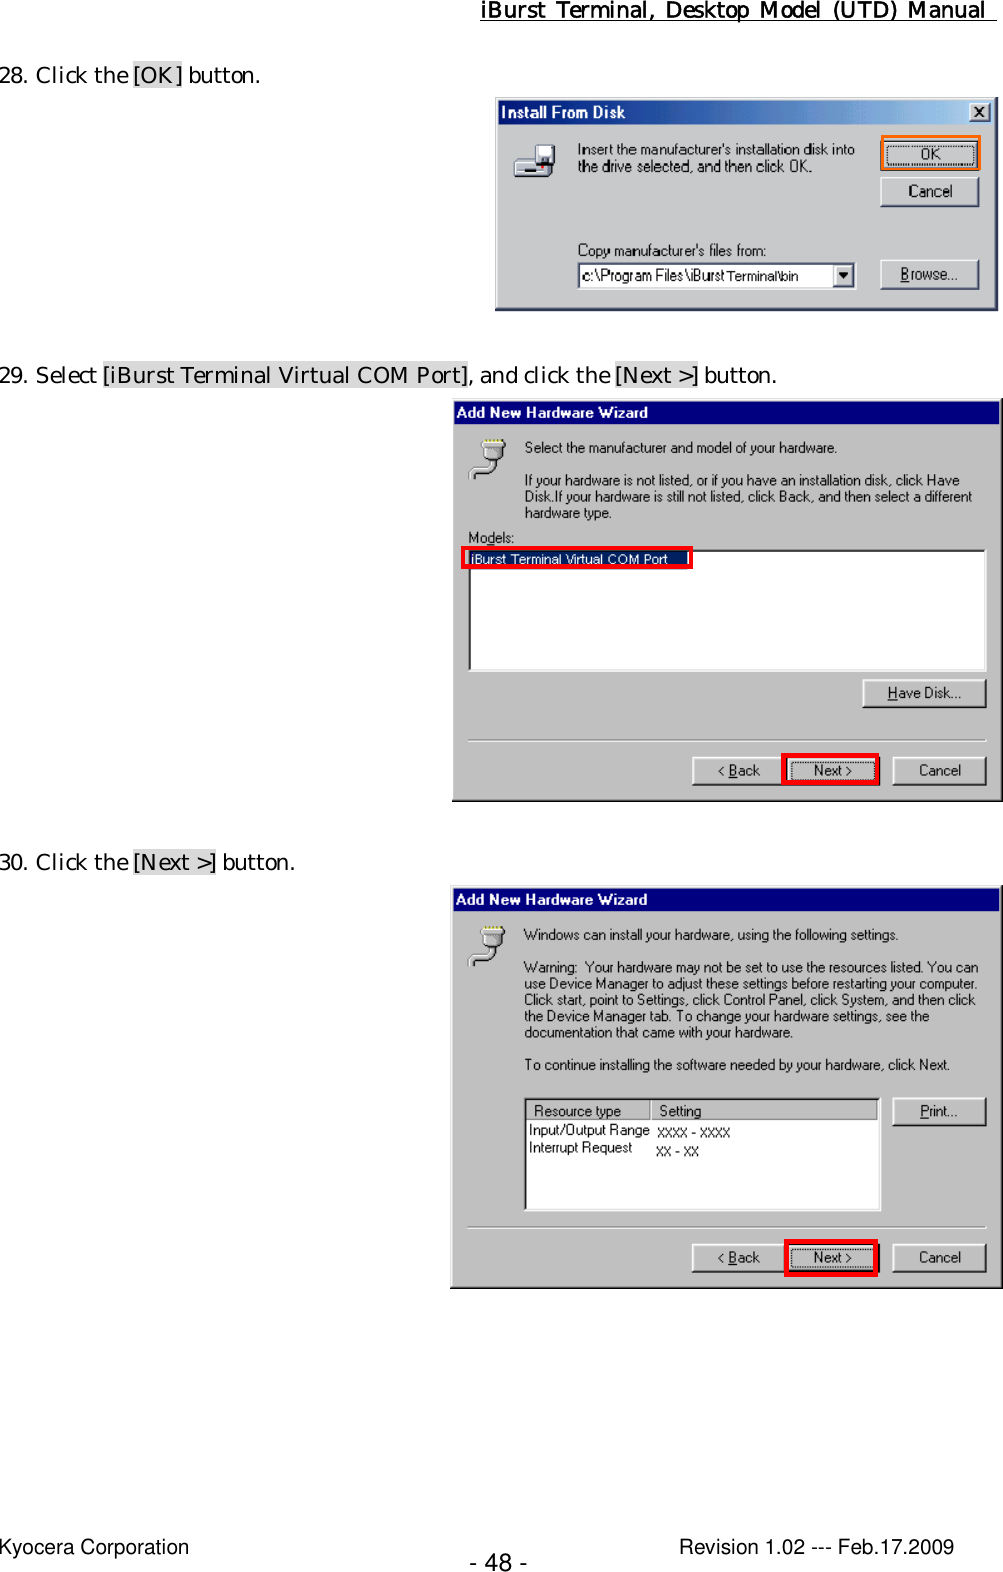 iBurst  Terminal, Desktop  Model  (UTD)  Manual    Kyocera Corporation                                                                                              Revision 1.02 --- Feb.17.2009 - 48 - 28. Click the [OK] button.   29. Select [iBurst Terminal Virtual COM Port], and click the [Next &gt;] button.   30. Click the [Next &gt;] button.   